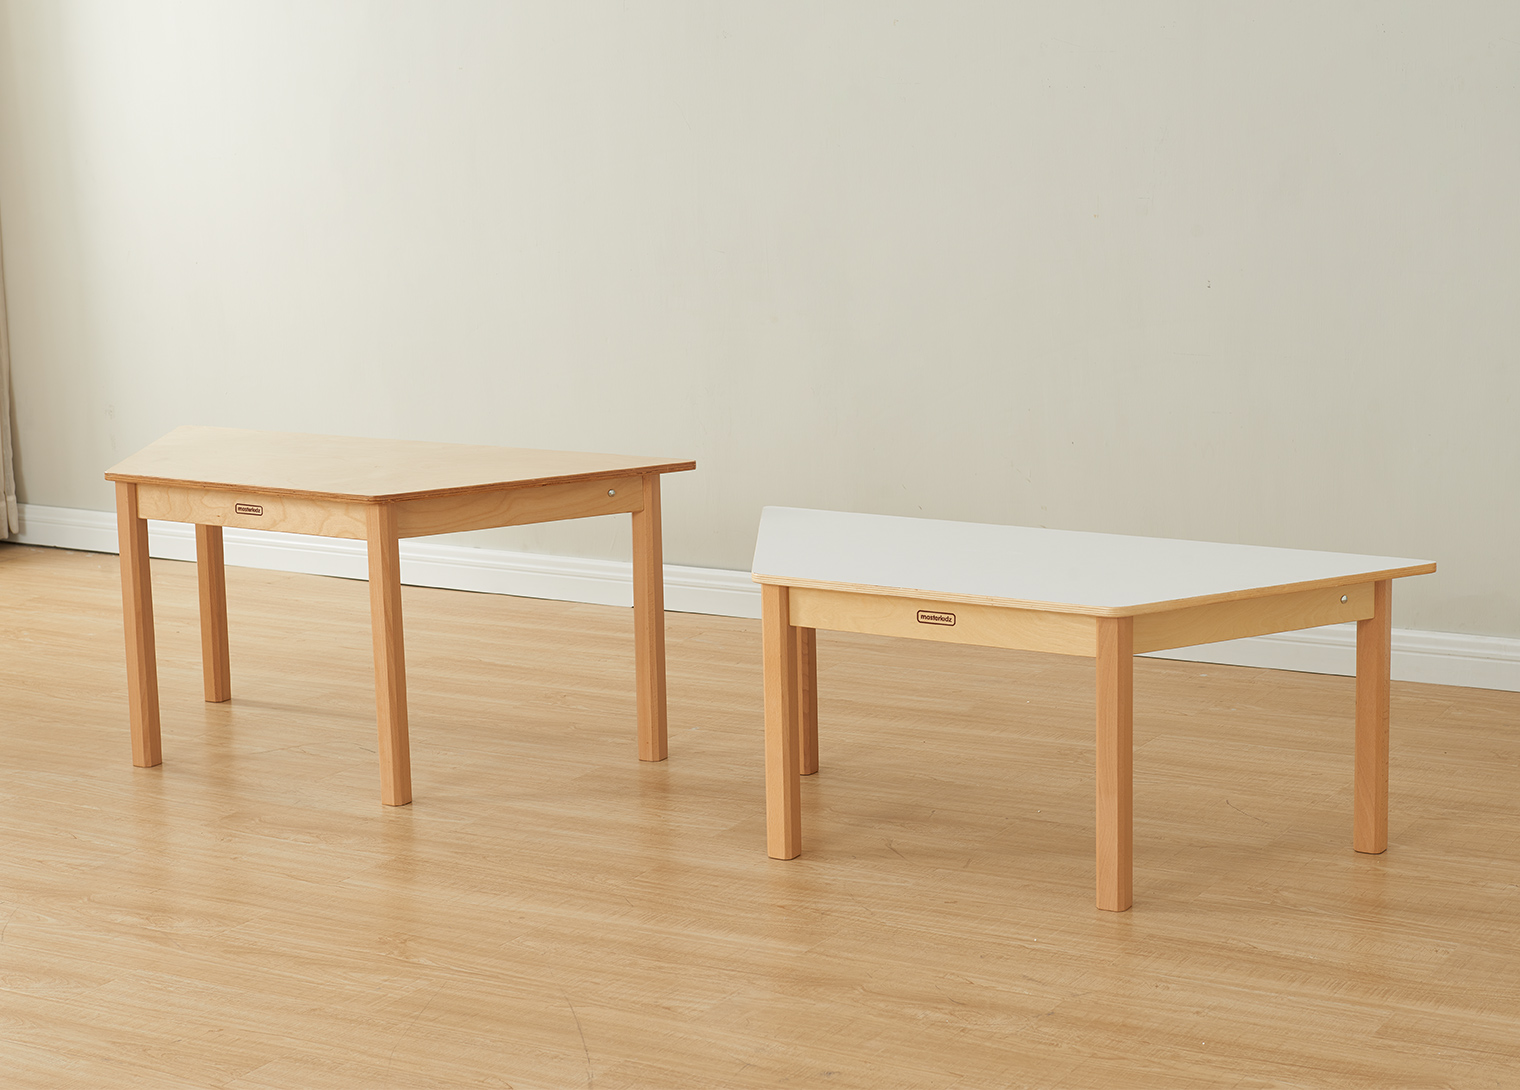 Inga Design Kids - 365H Trapezoidal Table (Clear Varnish)